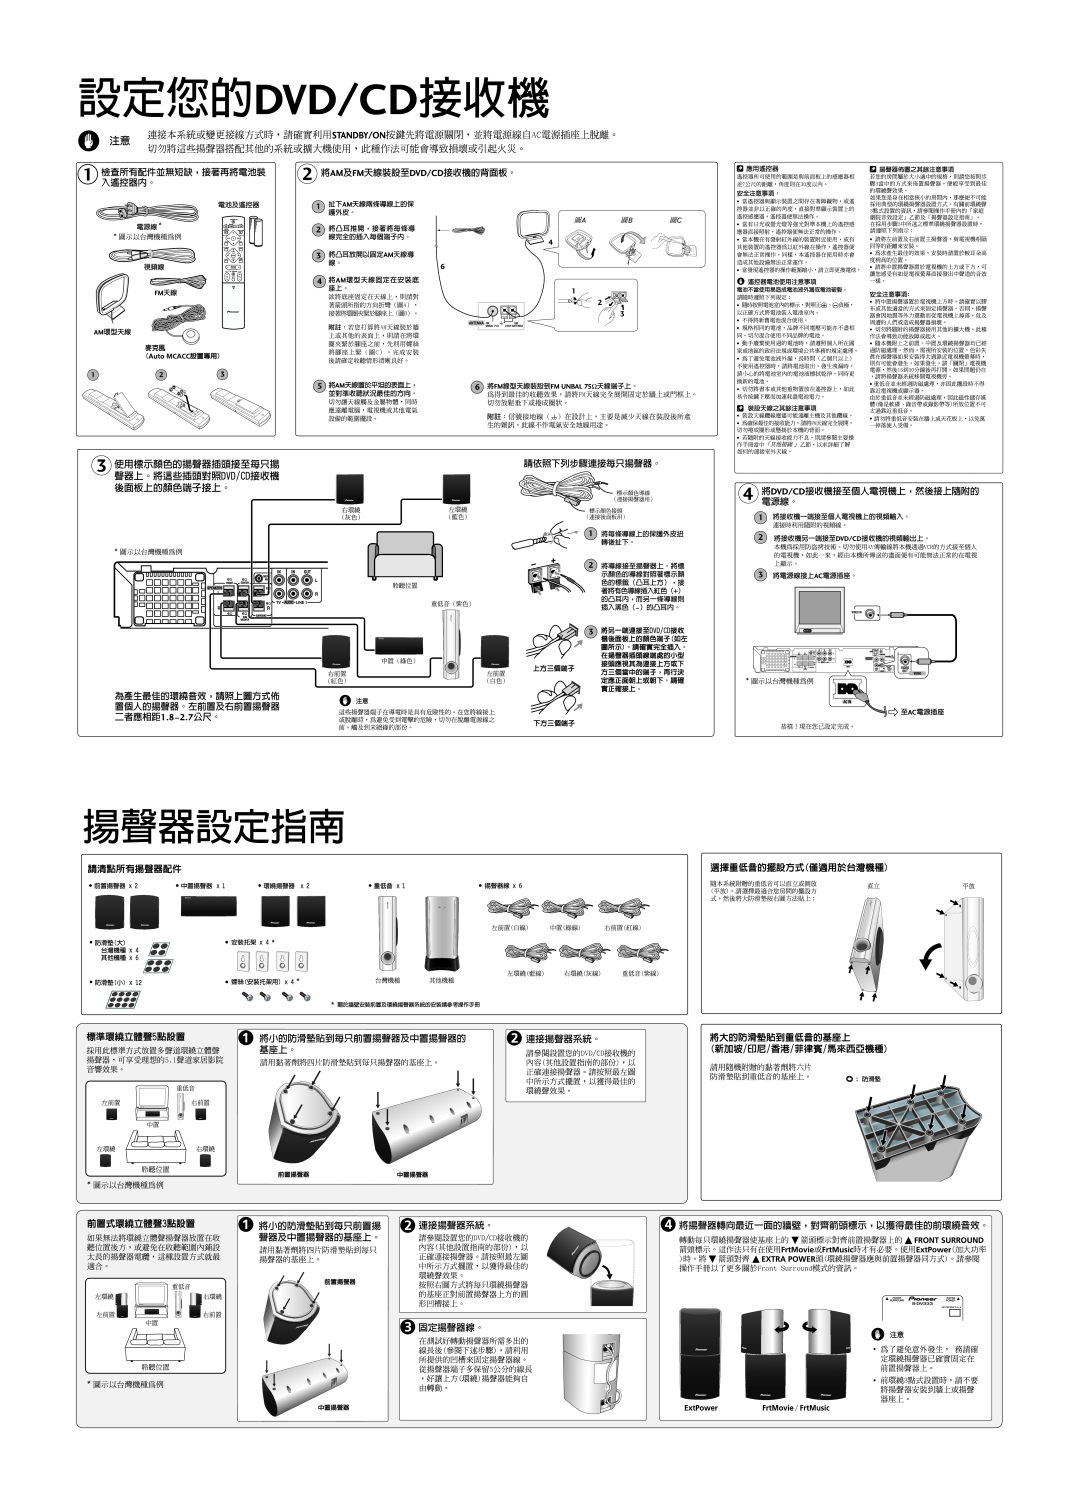 Pioneer HTZ-333DVD setup guide 